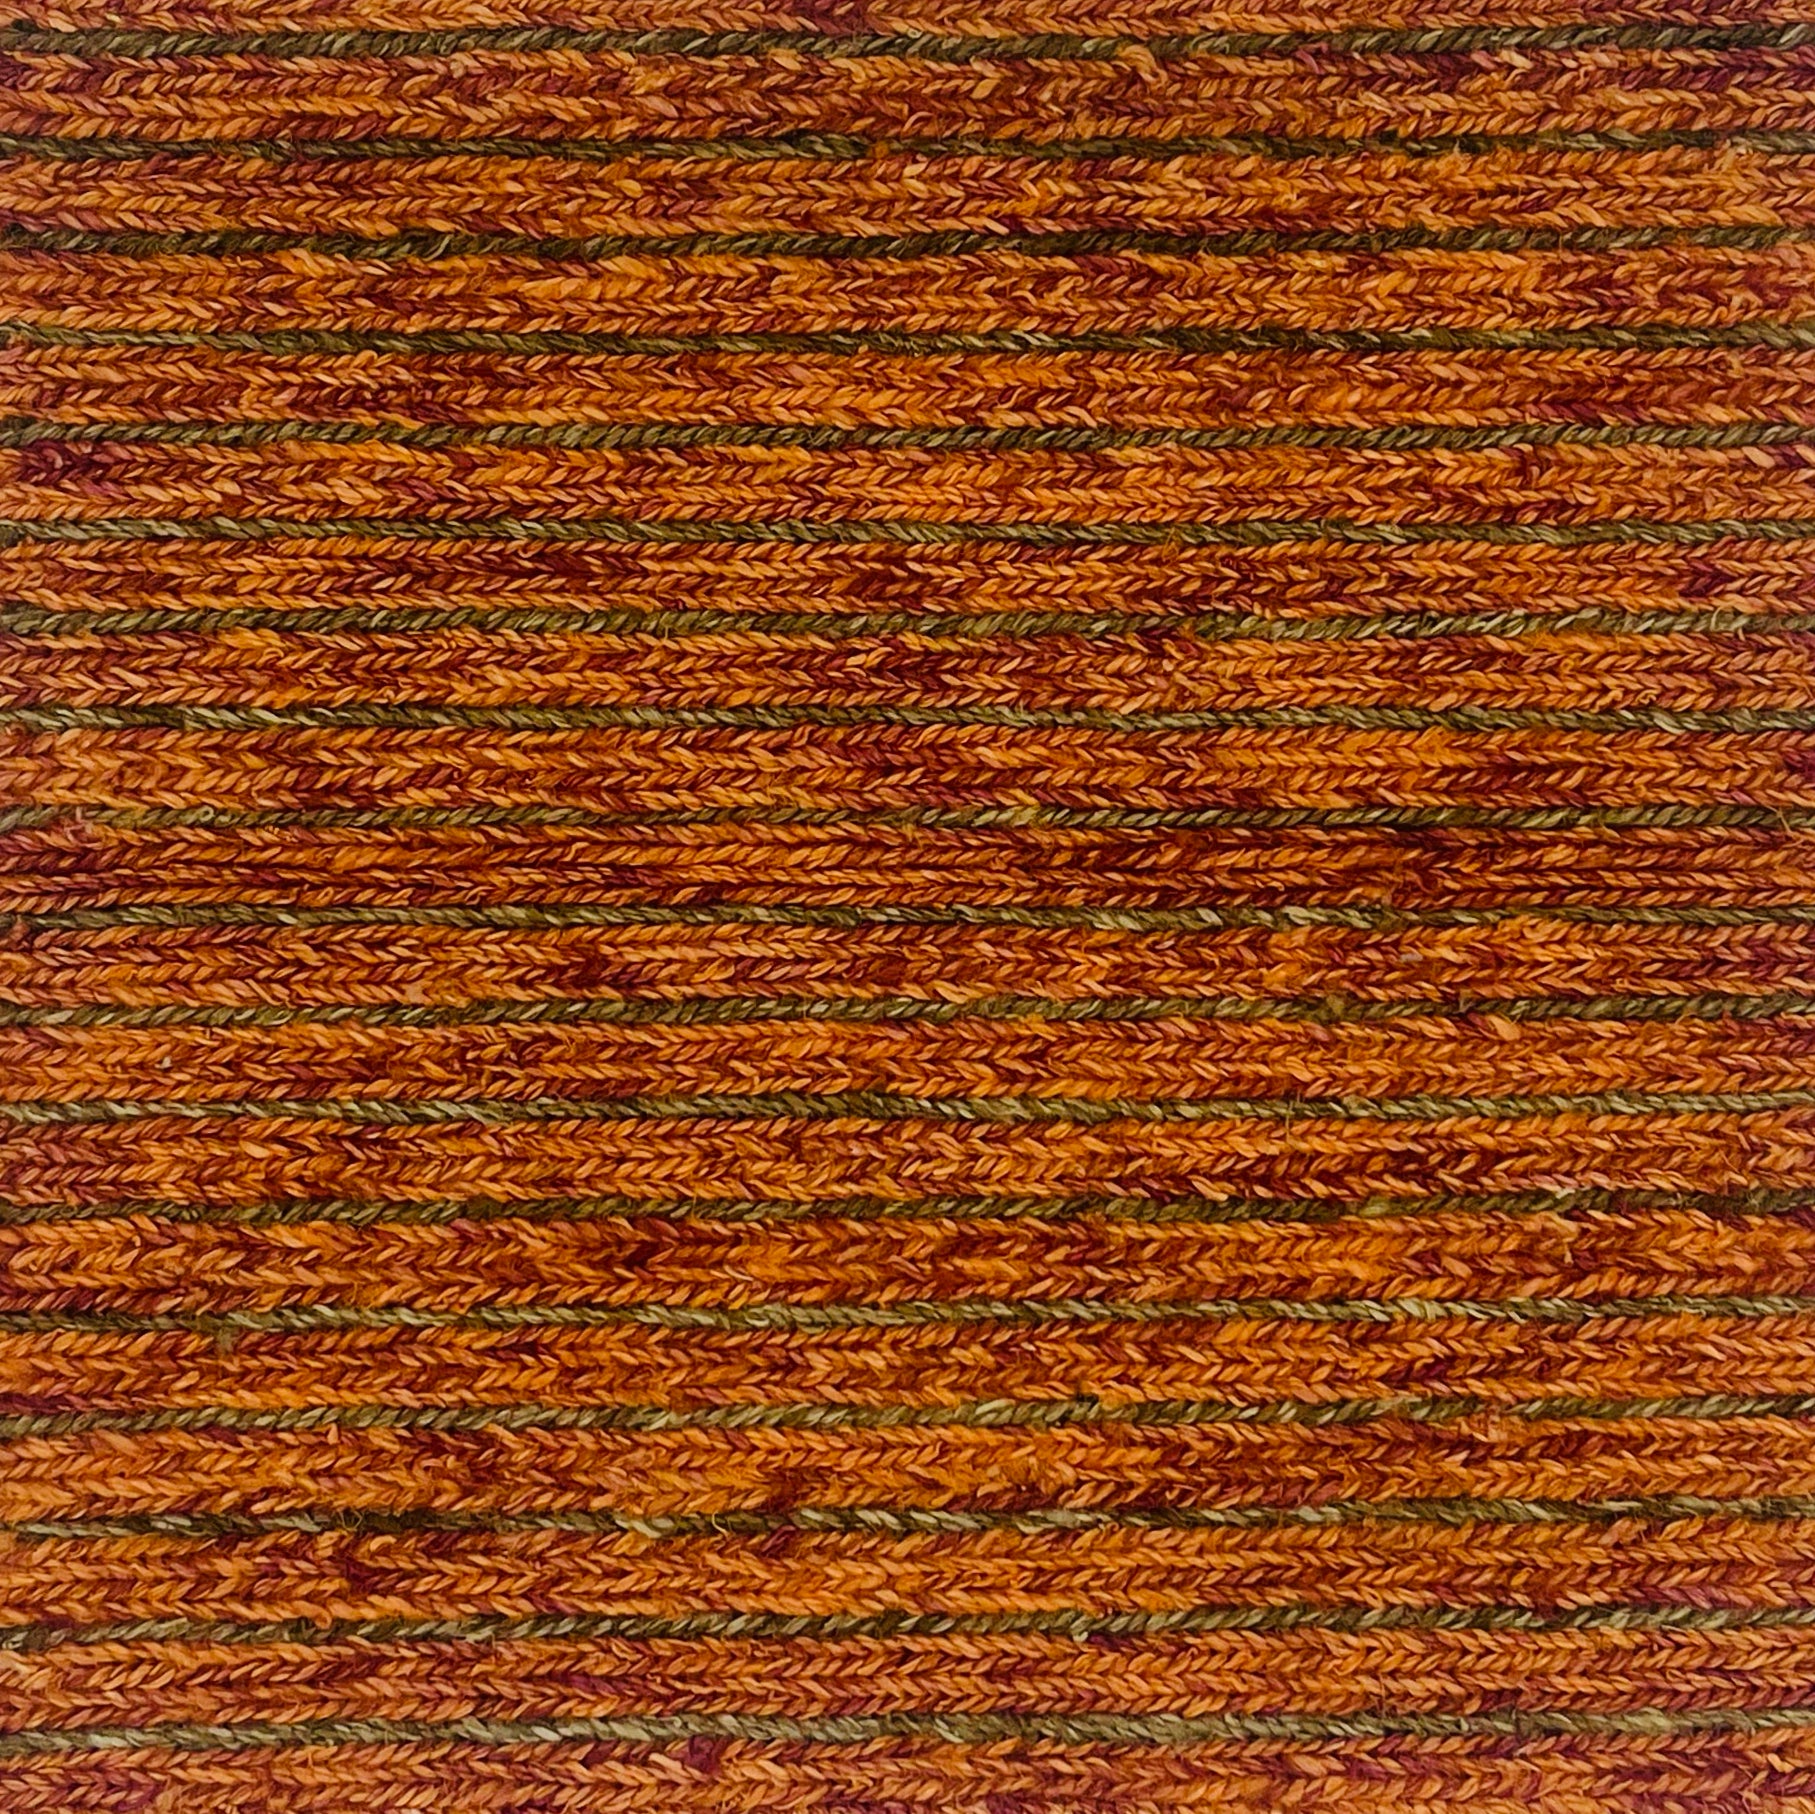 Woven rug swatch in natural fibers in an orange and dark brown stripe pattern